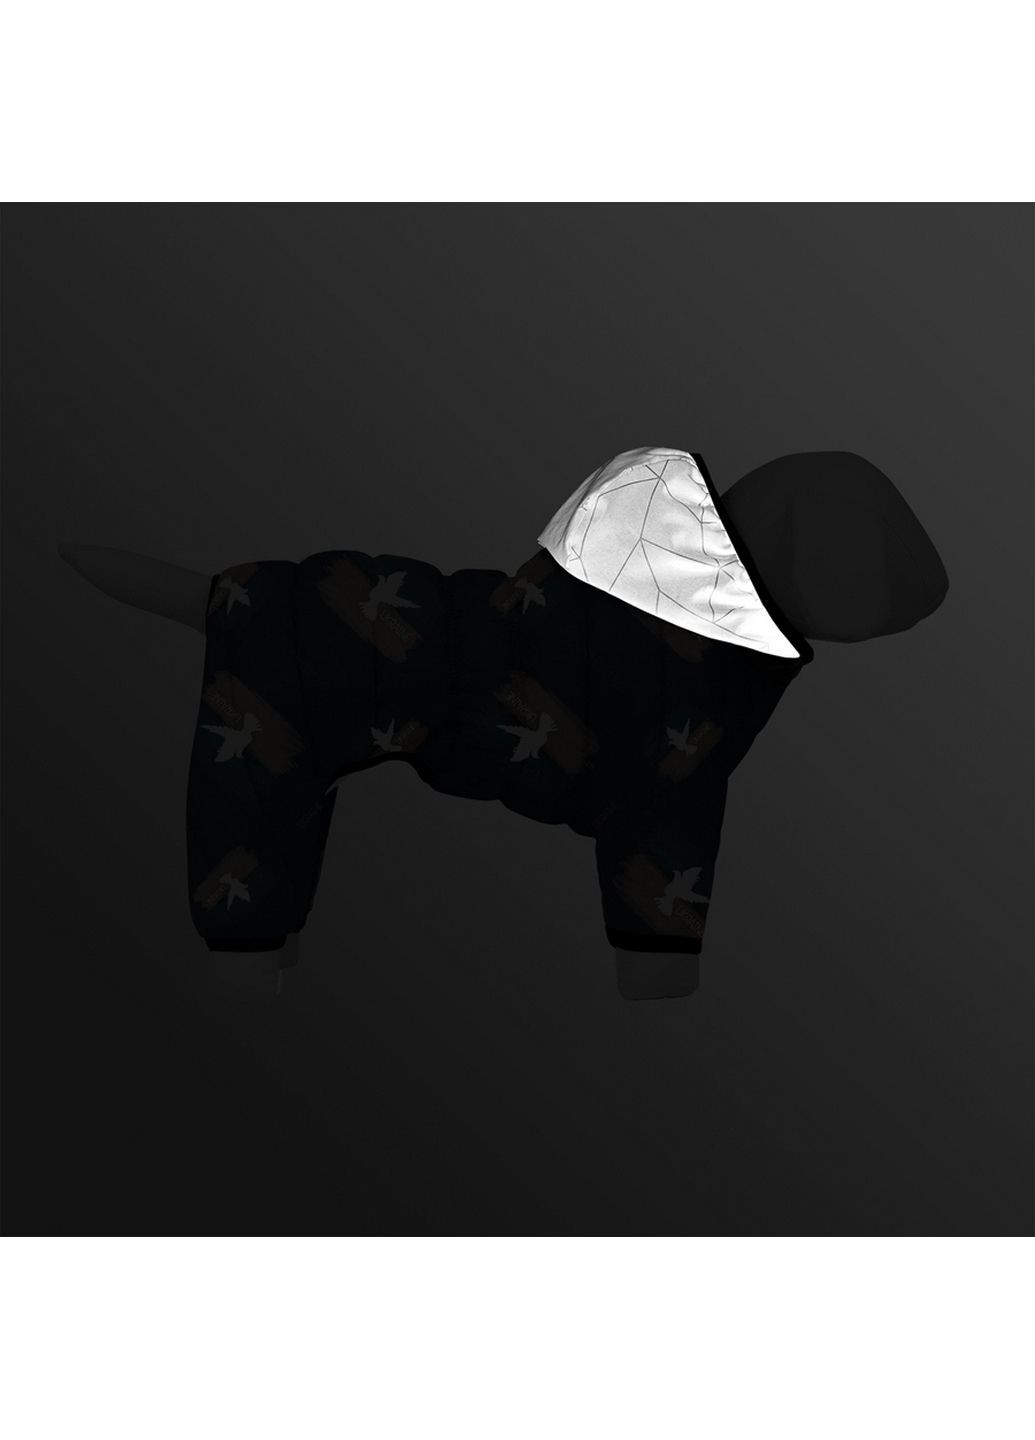 Комбинезон для собак рисунок "флаг" WAUDOG (282591420)